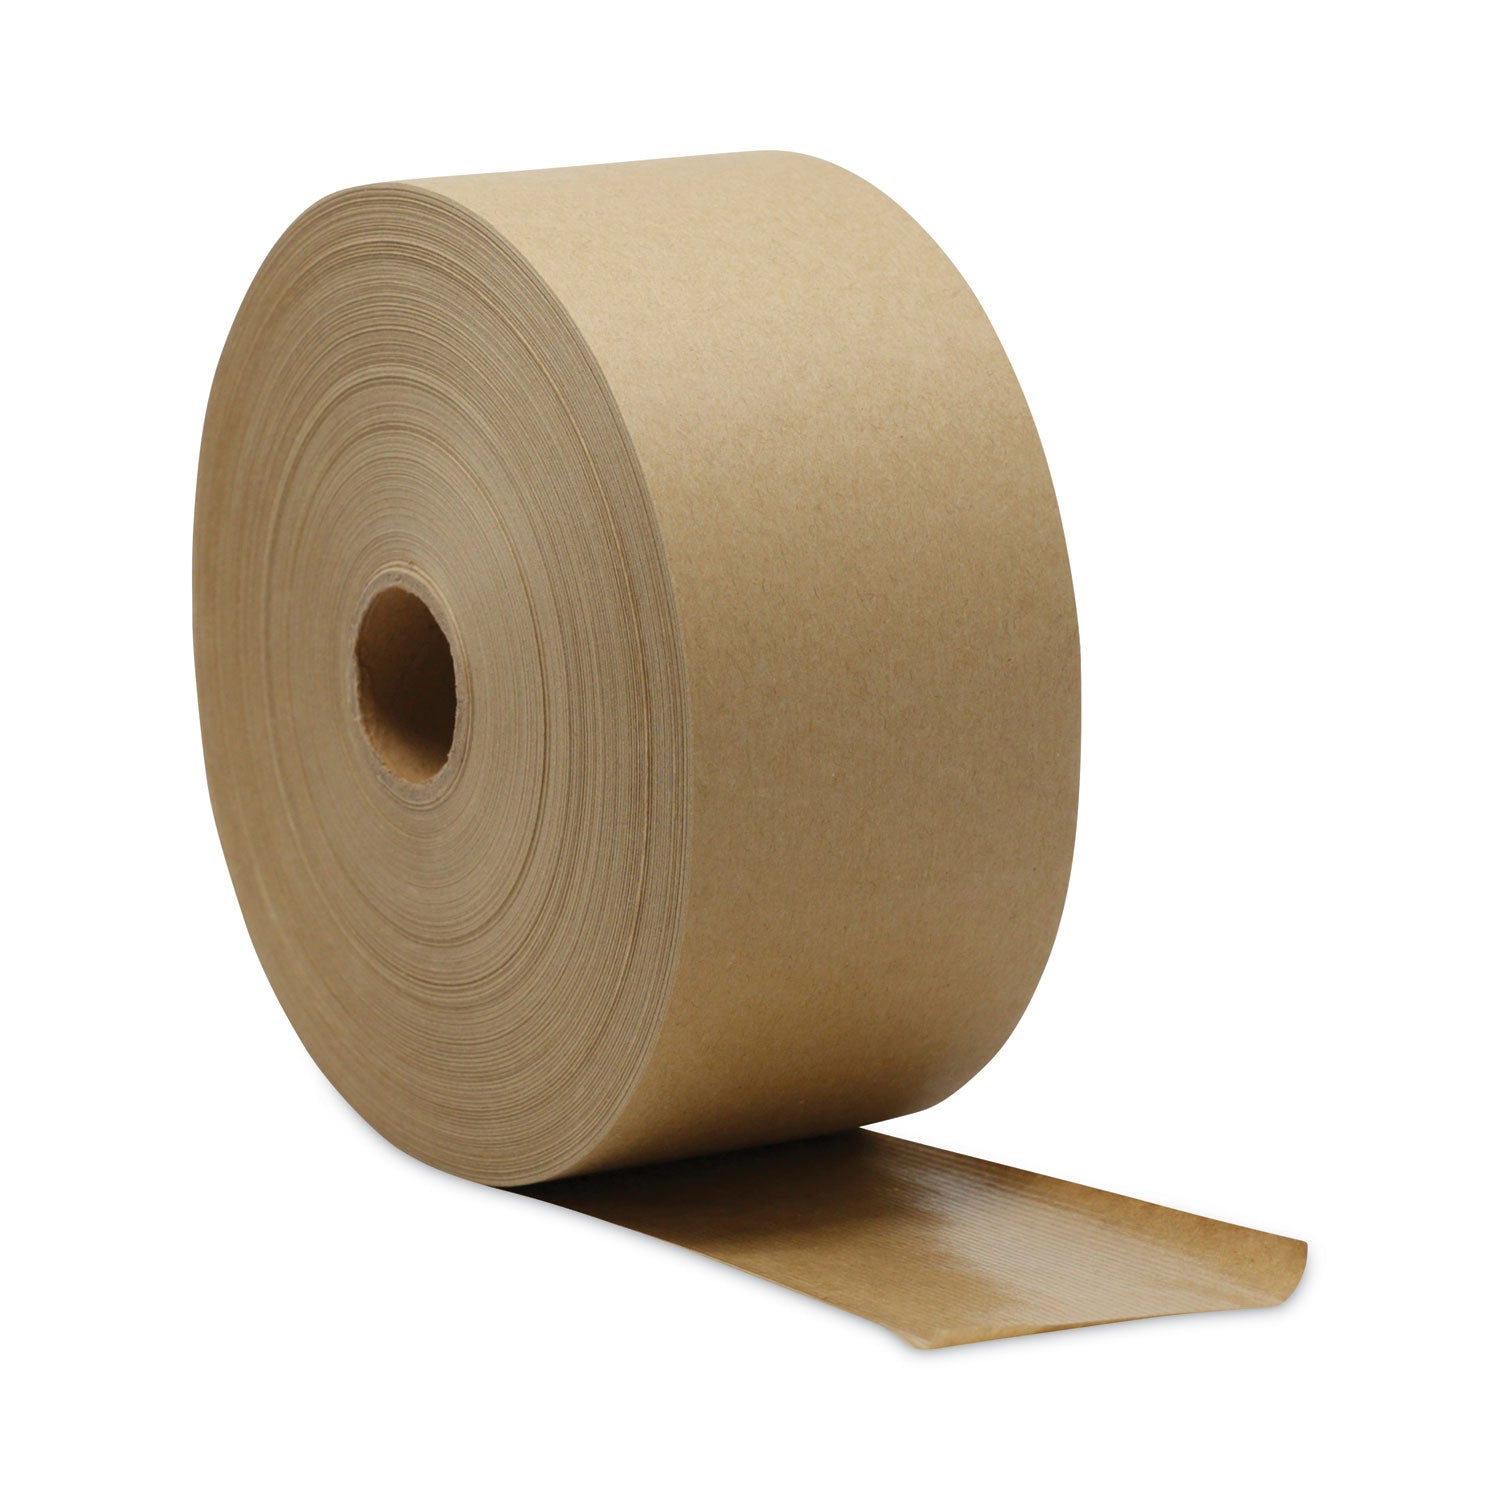 gummed-kraft-sealing-tape-3-core-3-x-600-ft-brown-10-carton_unv2800 - 2